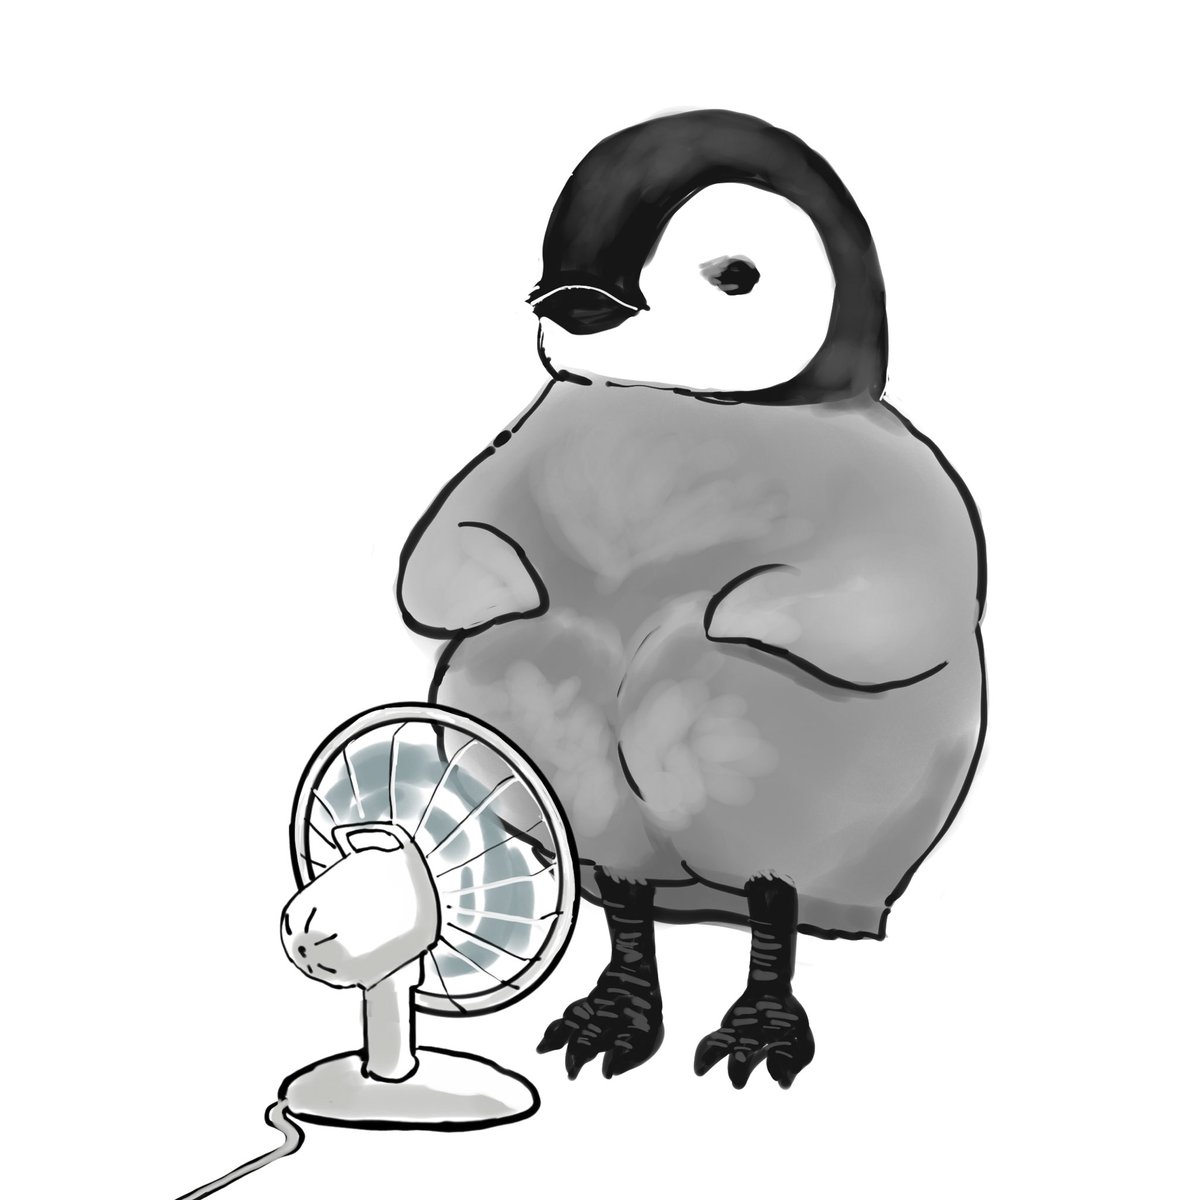 penguin no humans bird animal focus electric fan greyscale monochrome  illustration images